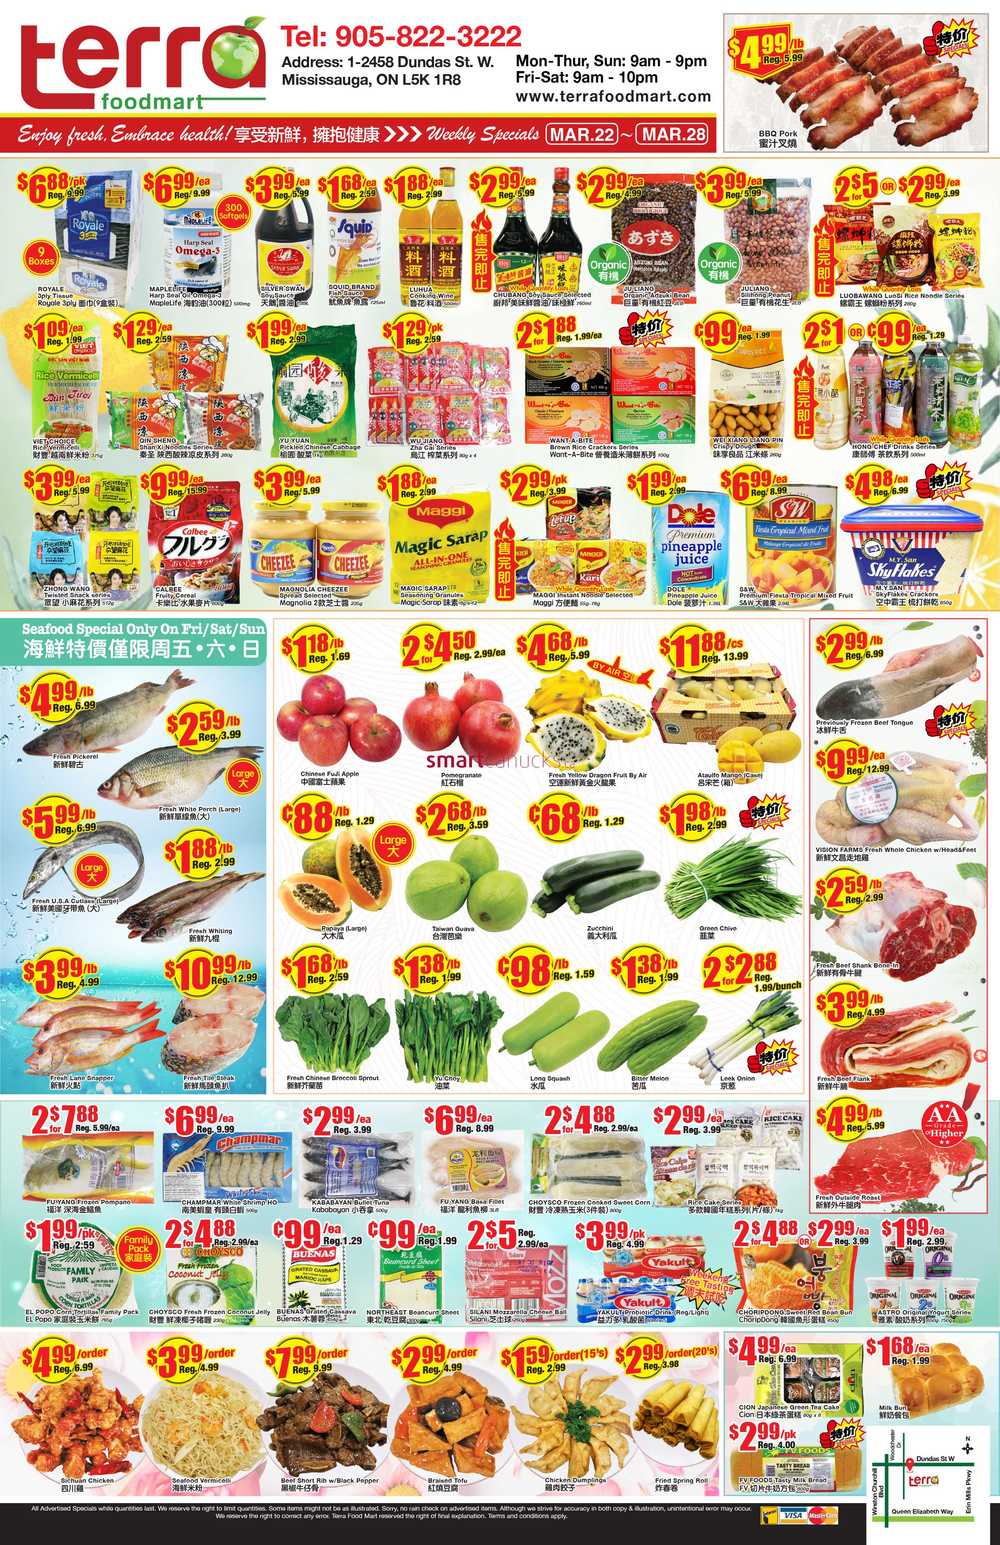 Terra Foodmart Flyer March 22 to 28